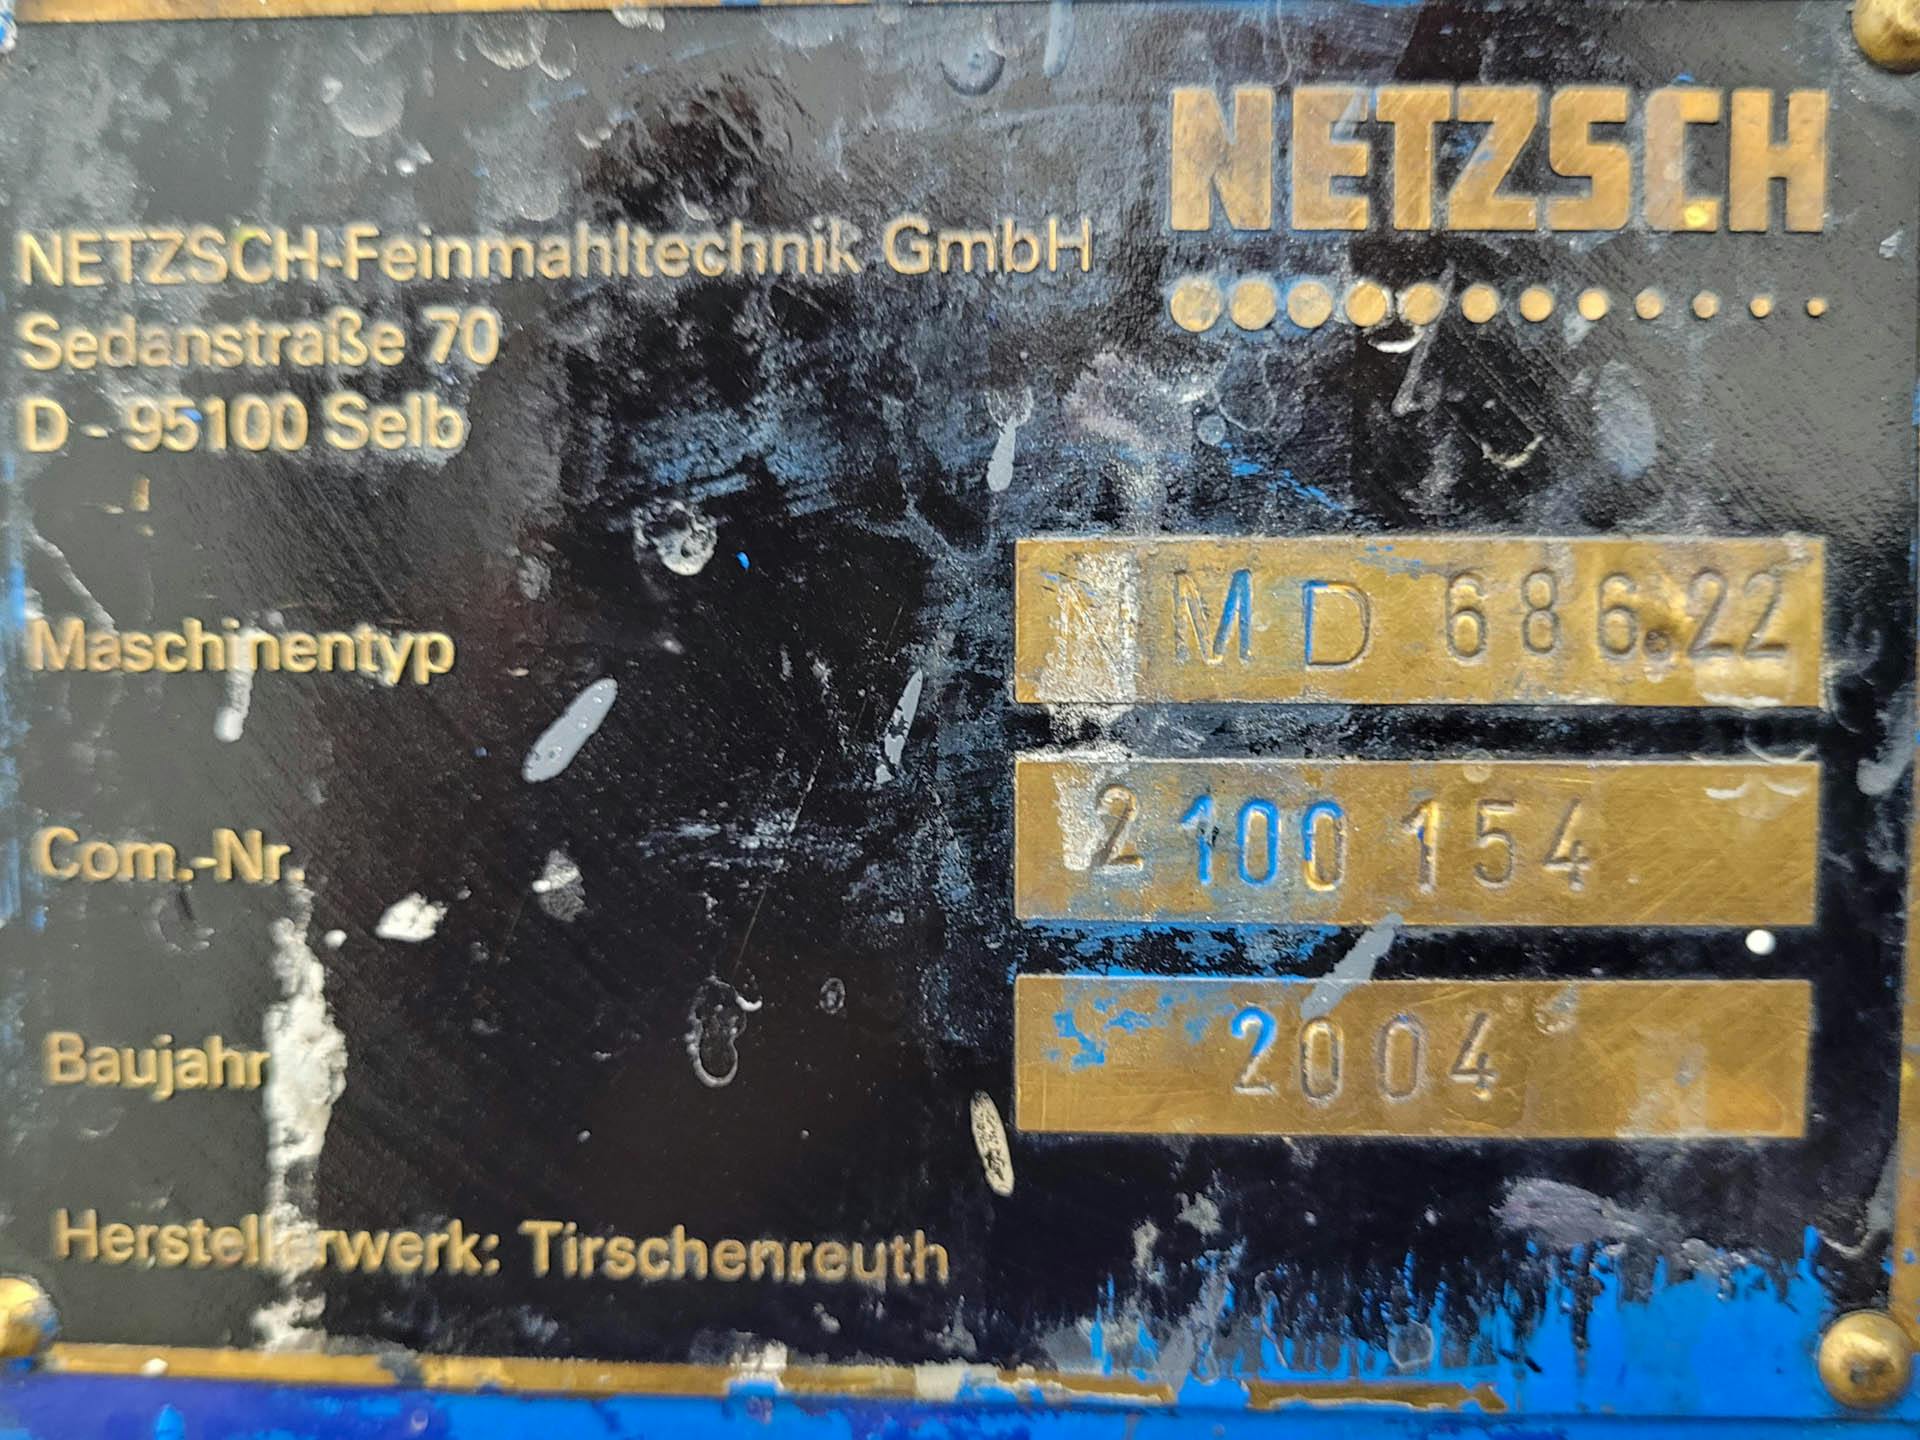 Netzsch NMD 686 22 - Dissolver - image 8